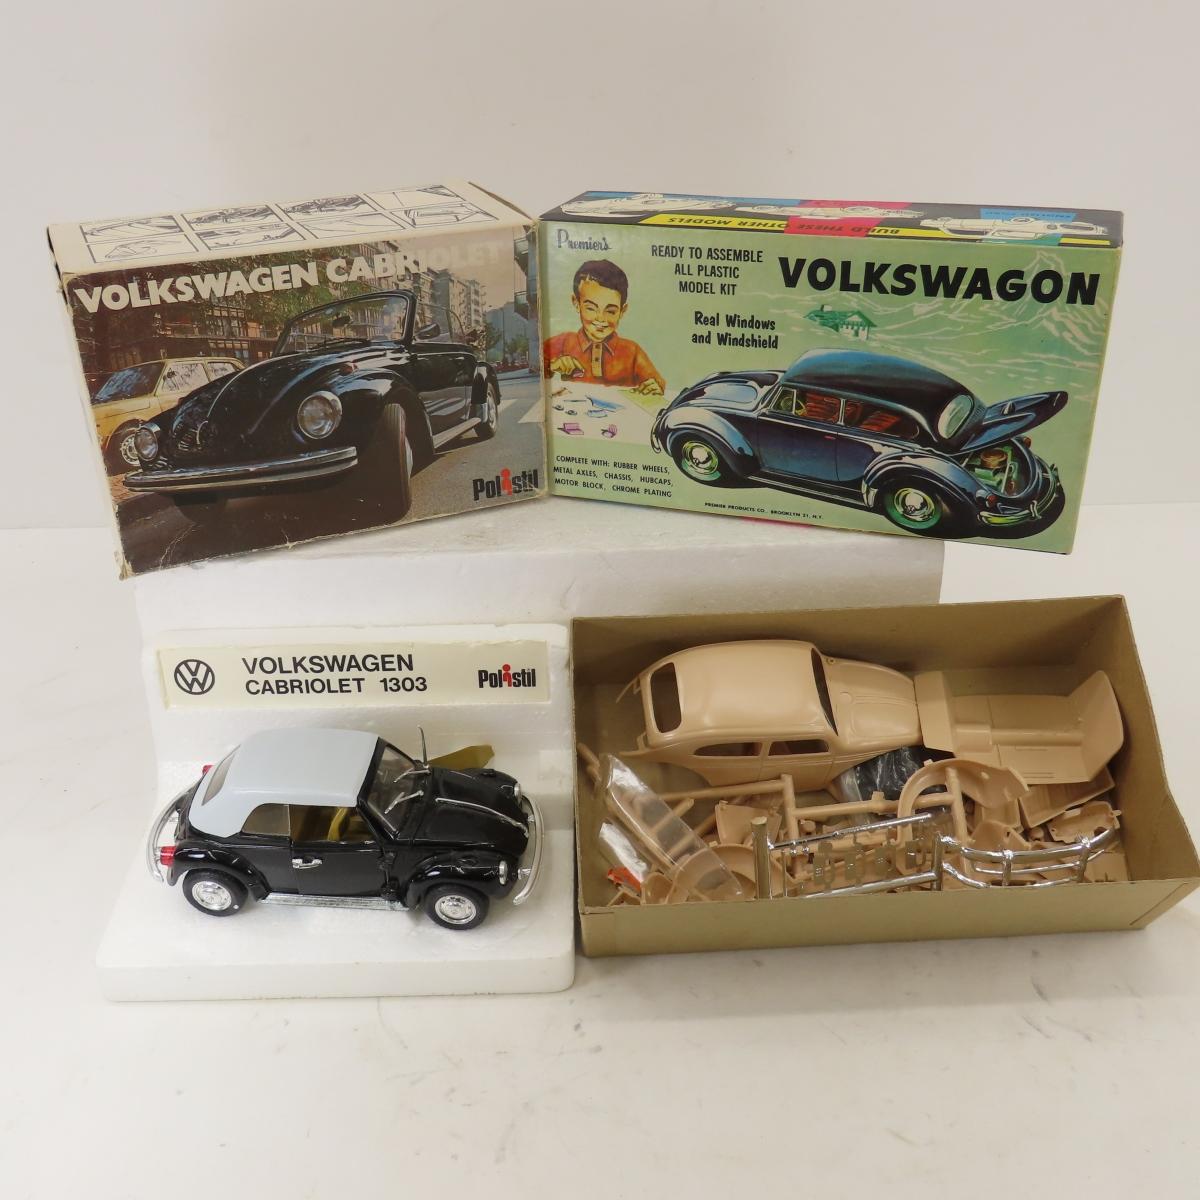 Volkswagen model Kit & Cabriolet 1303 Diecast